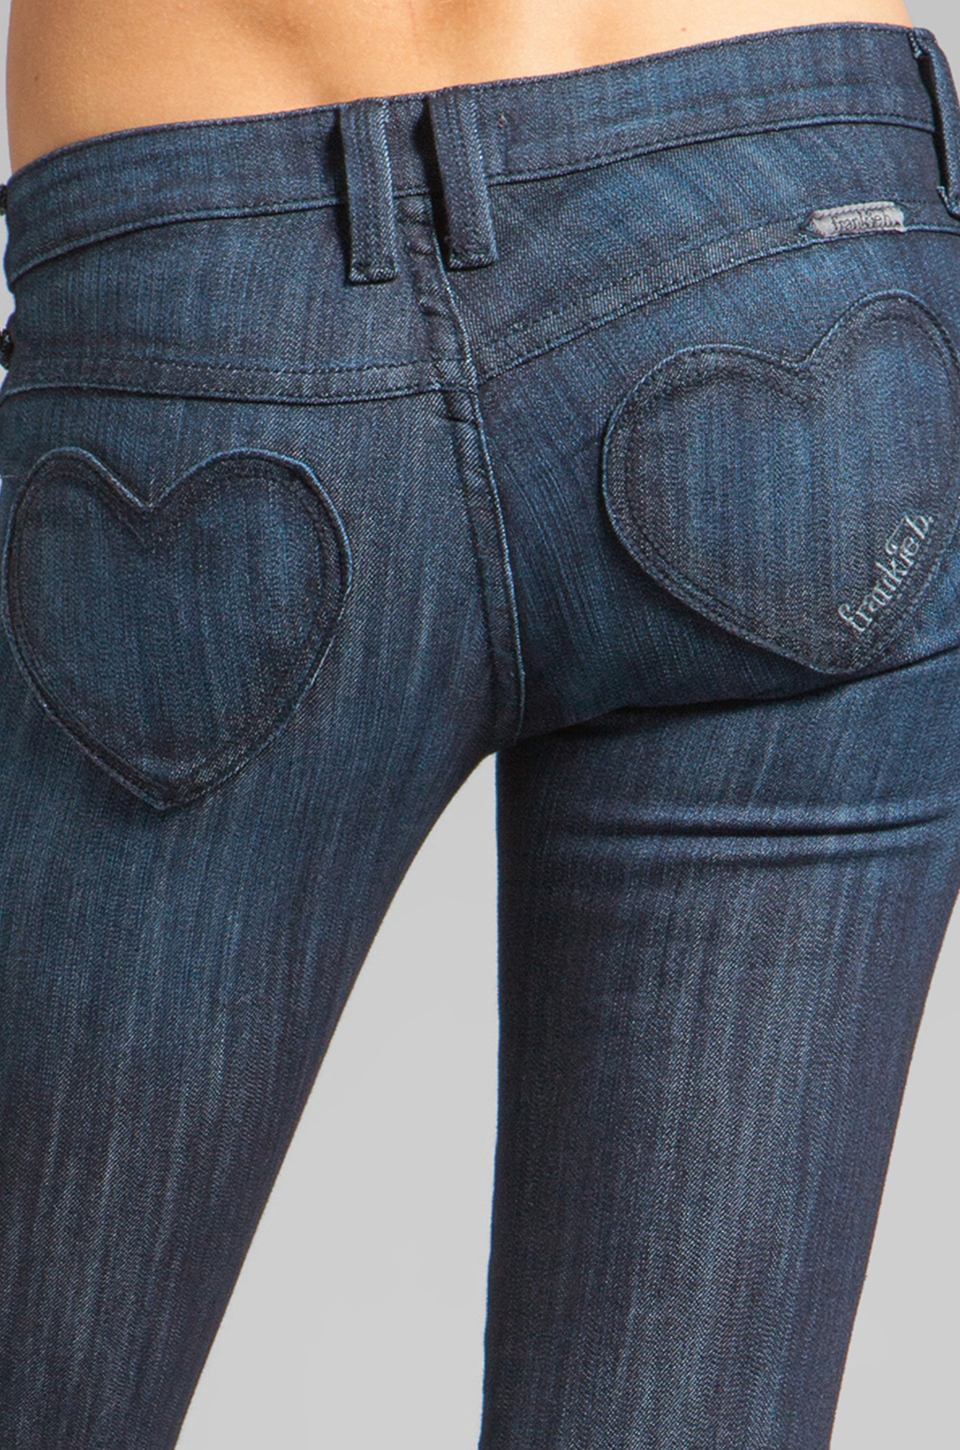 Frankie B. Jeans Fb Mine Heart Pocket Skinny Jean in Blue | Lyst